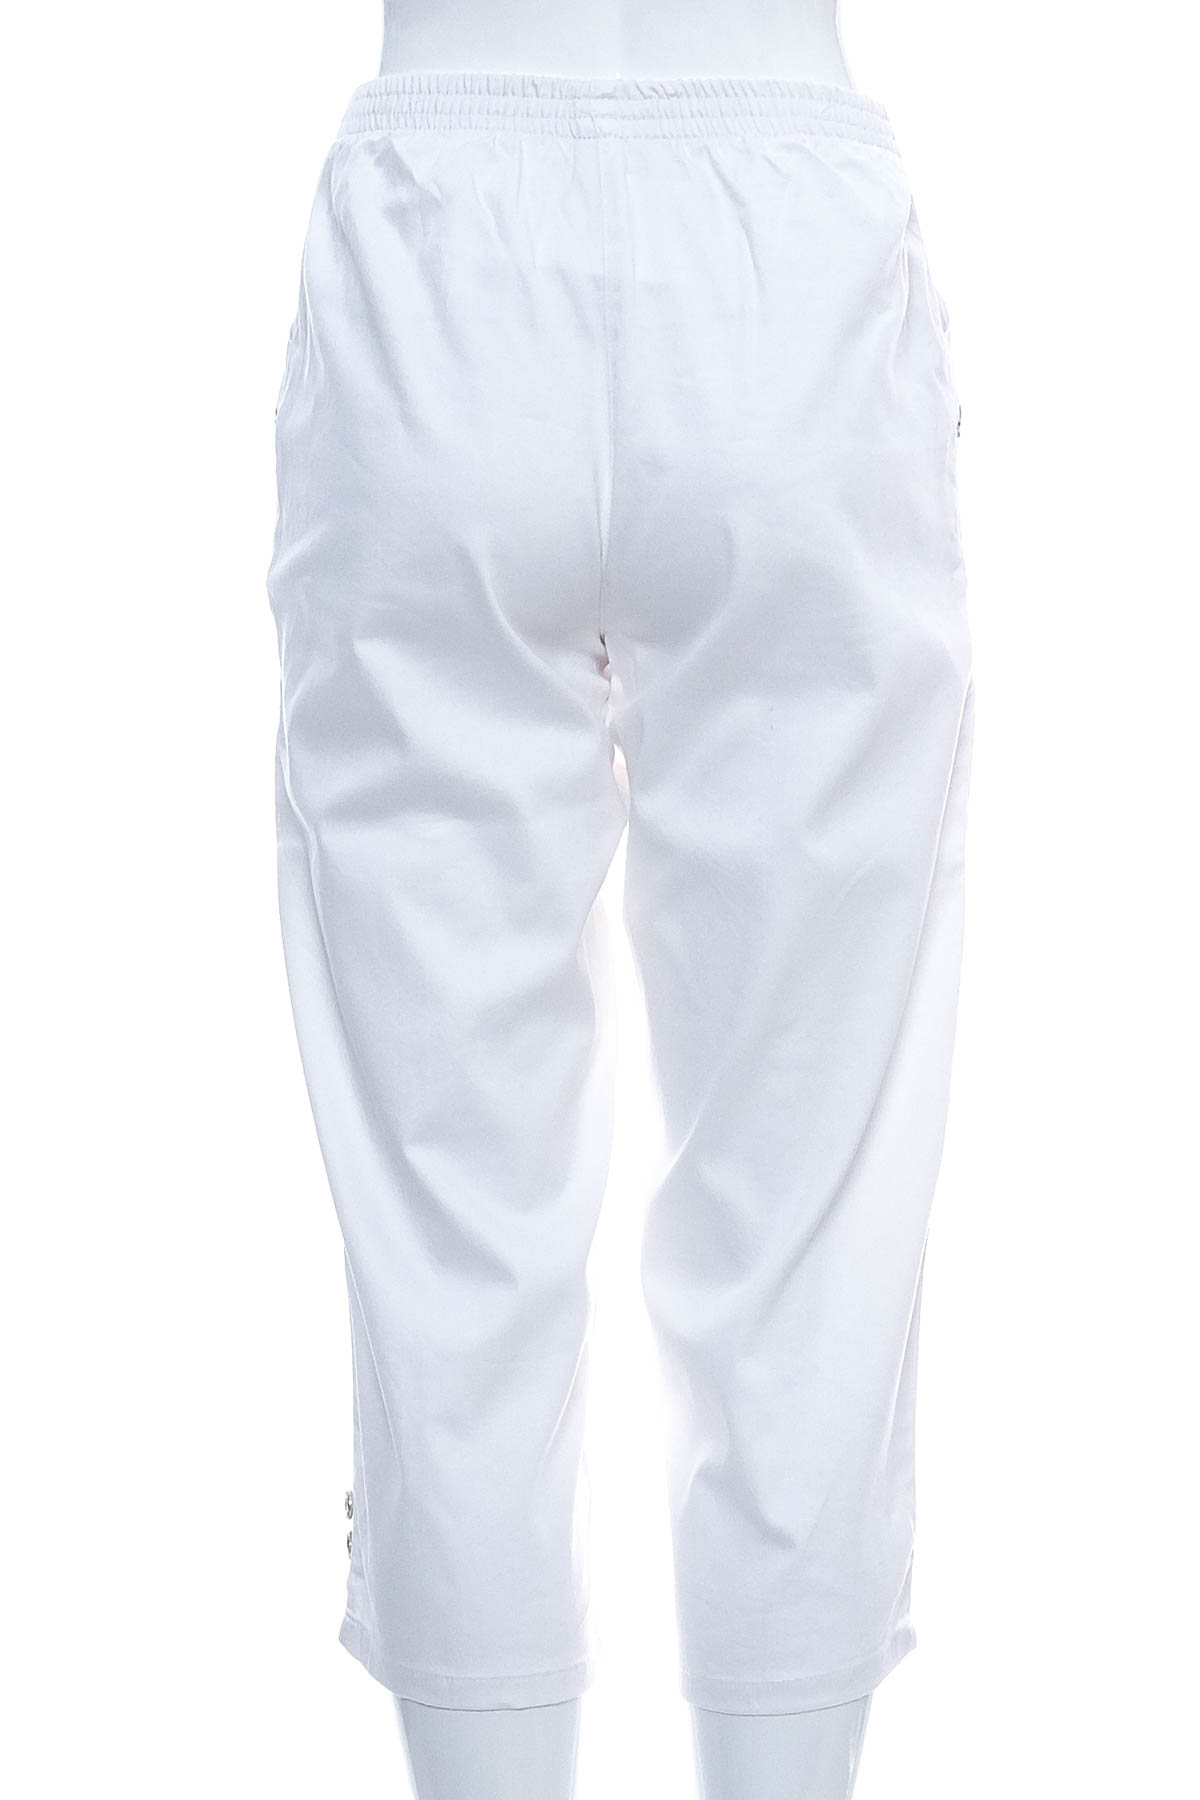 Krótkie spodnie damskie - Soya Concept - 1